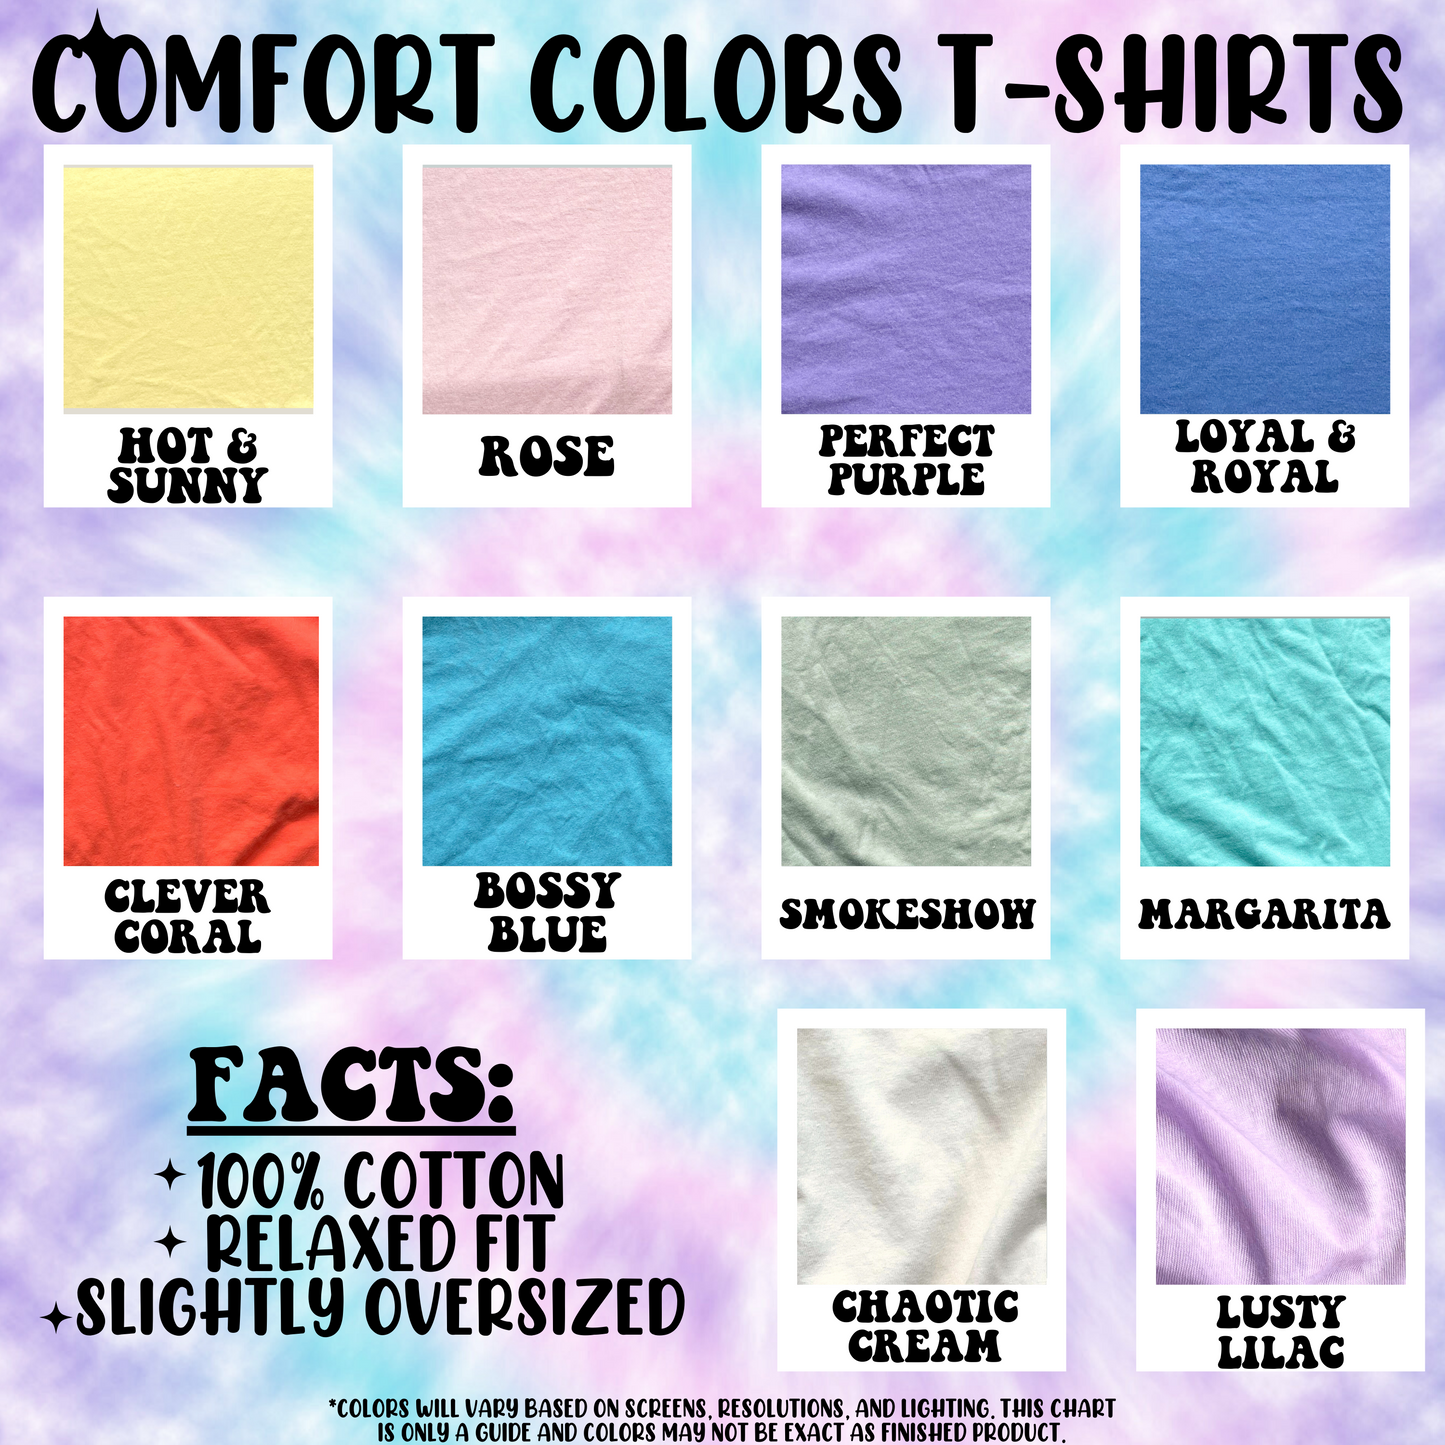 Block His Number Comfort Colors T-shirt